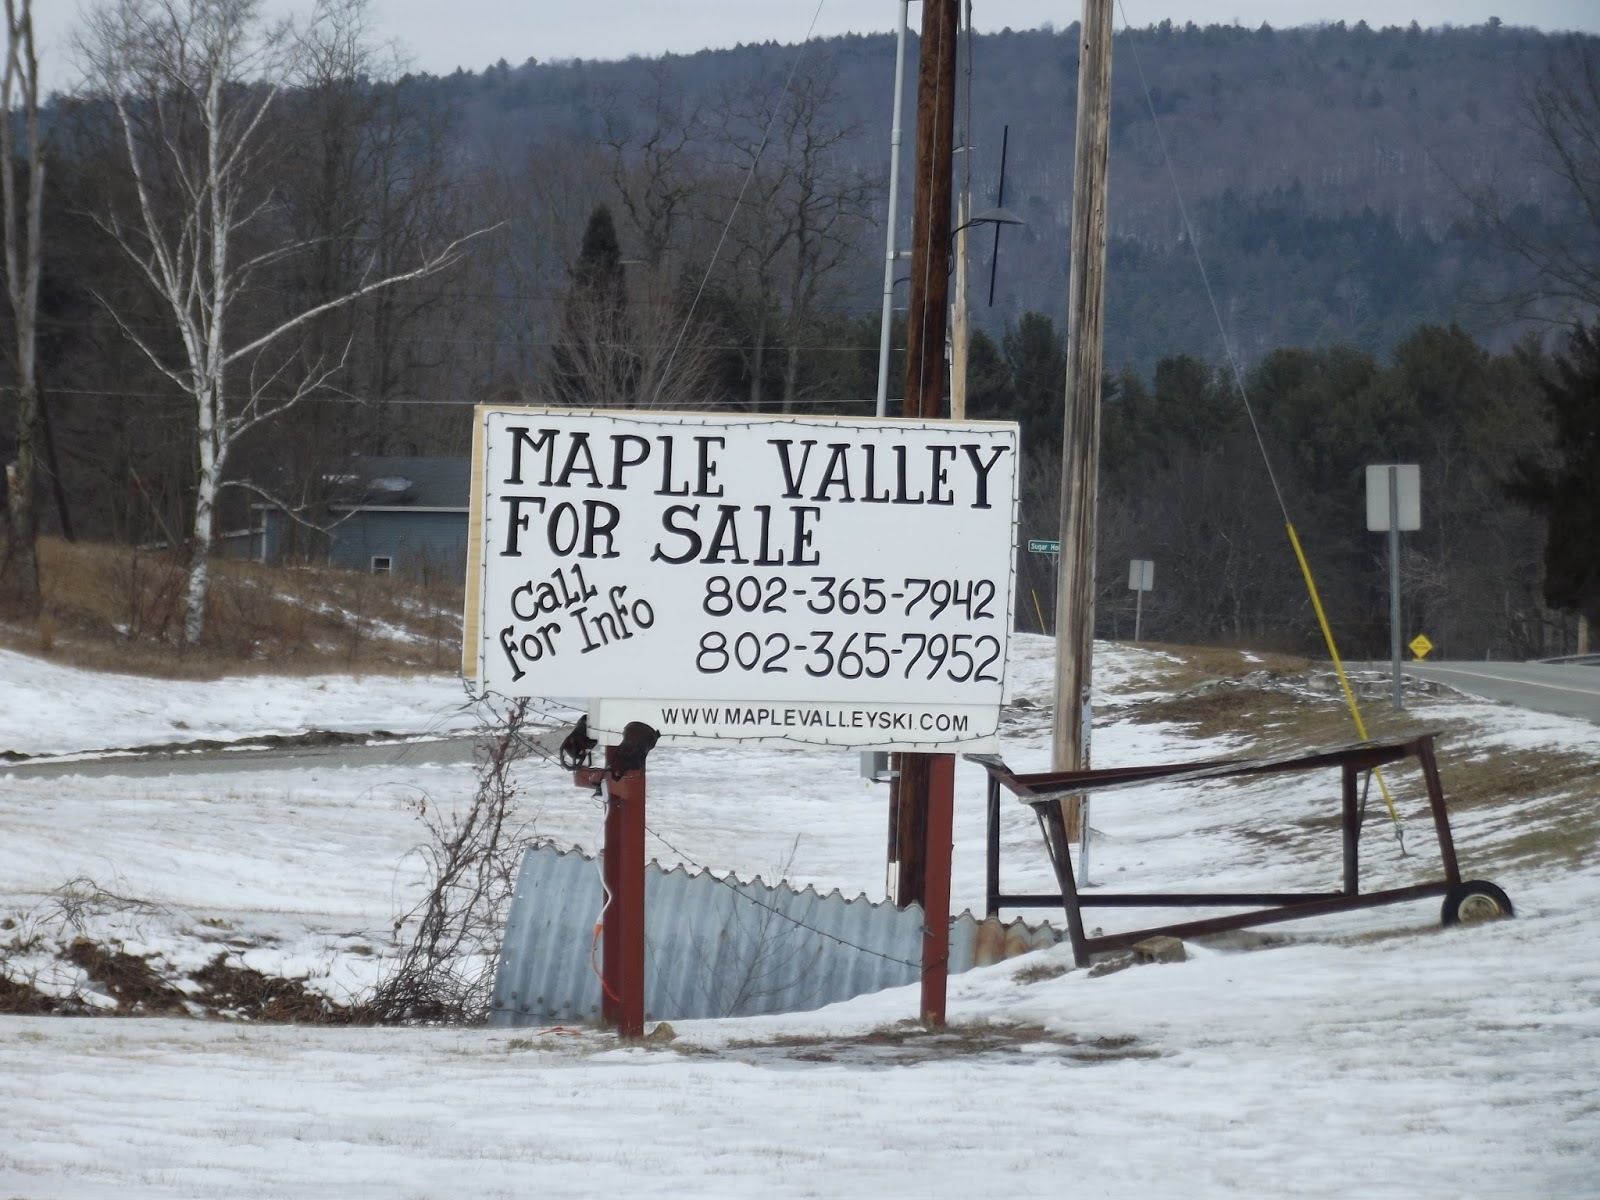 Maple Valley Ski